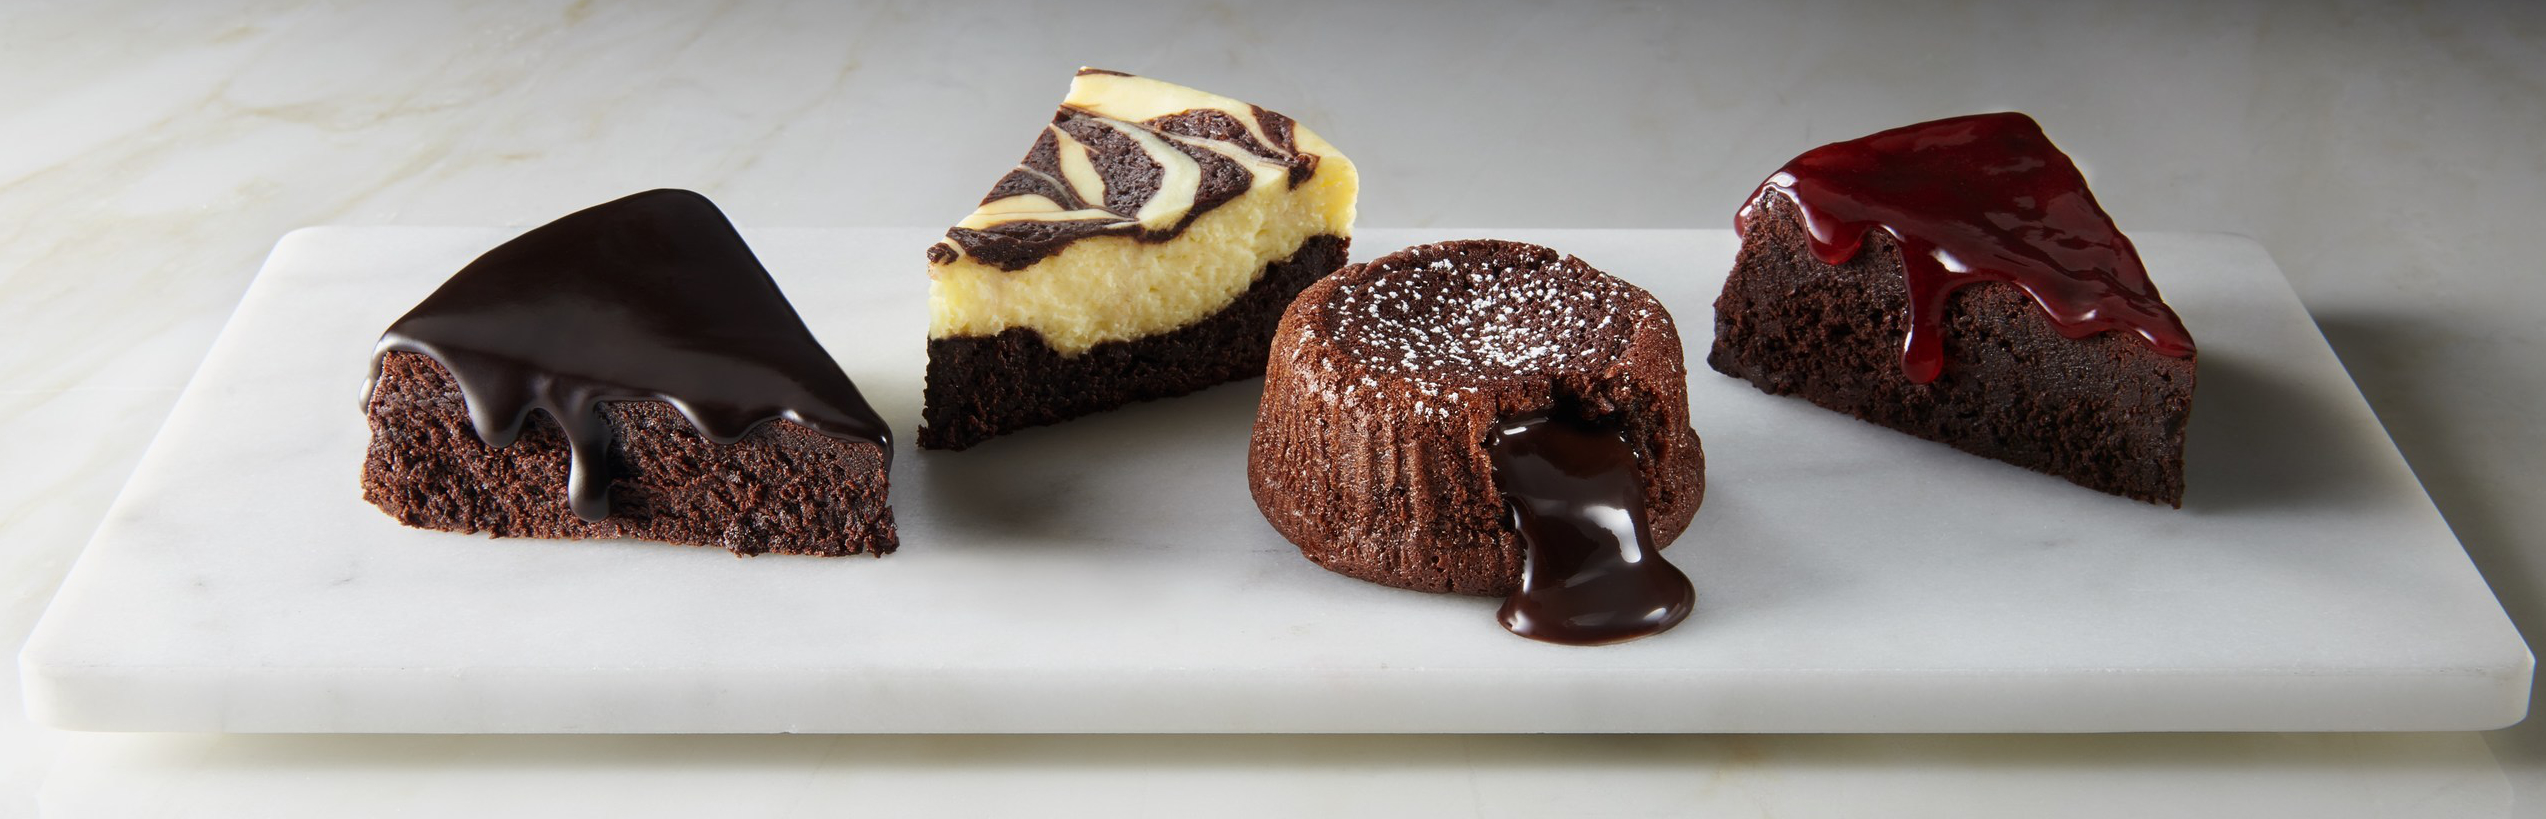 Godiva General Mills desserts